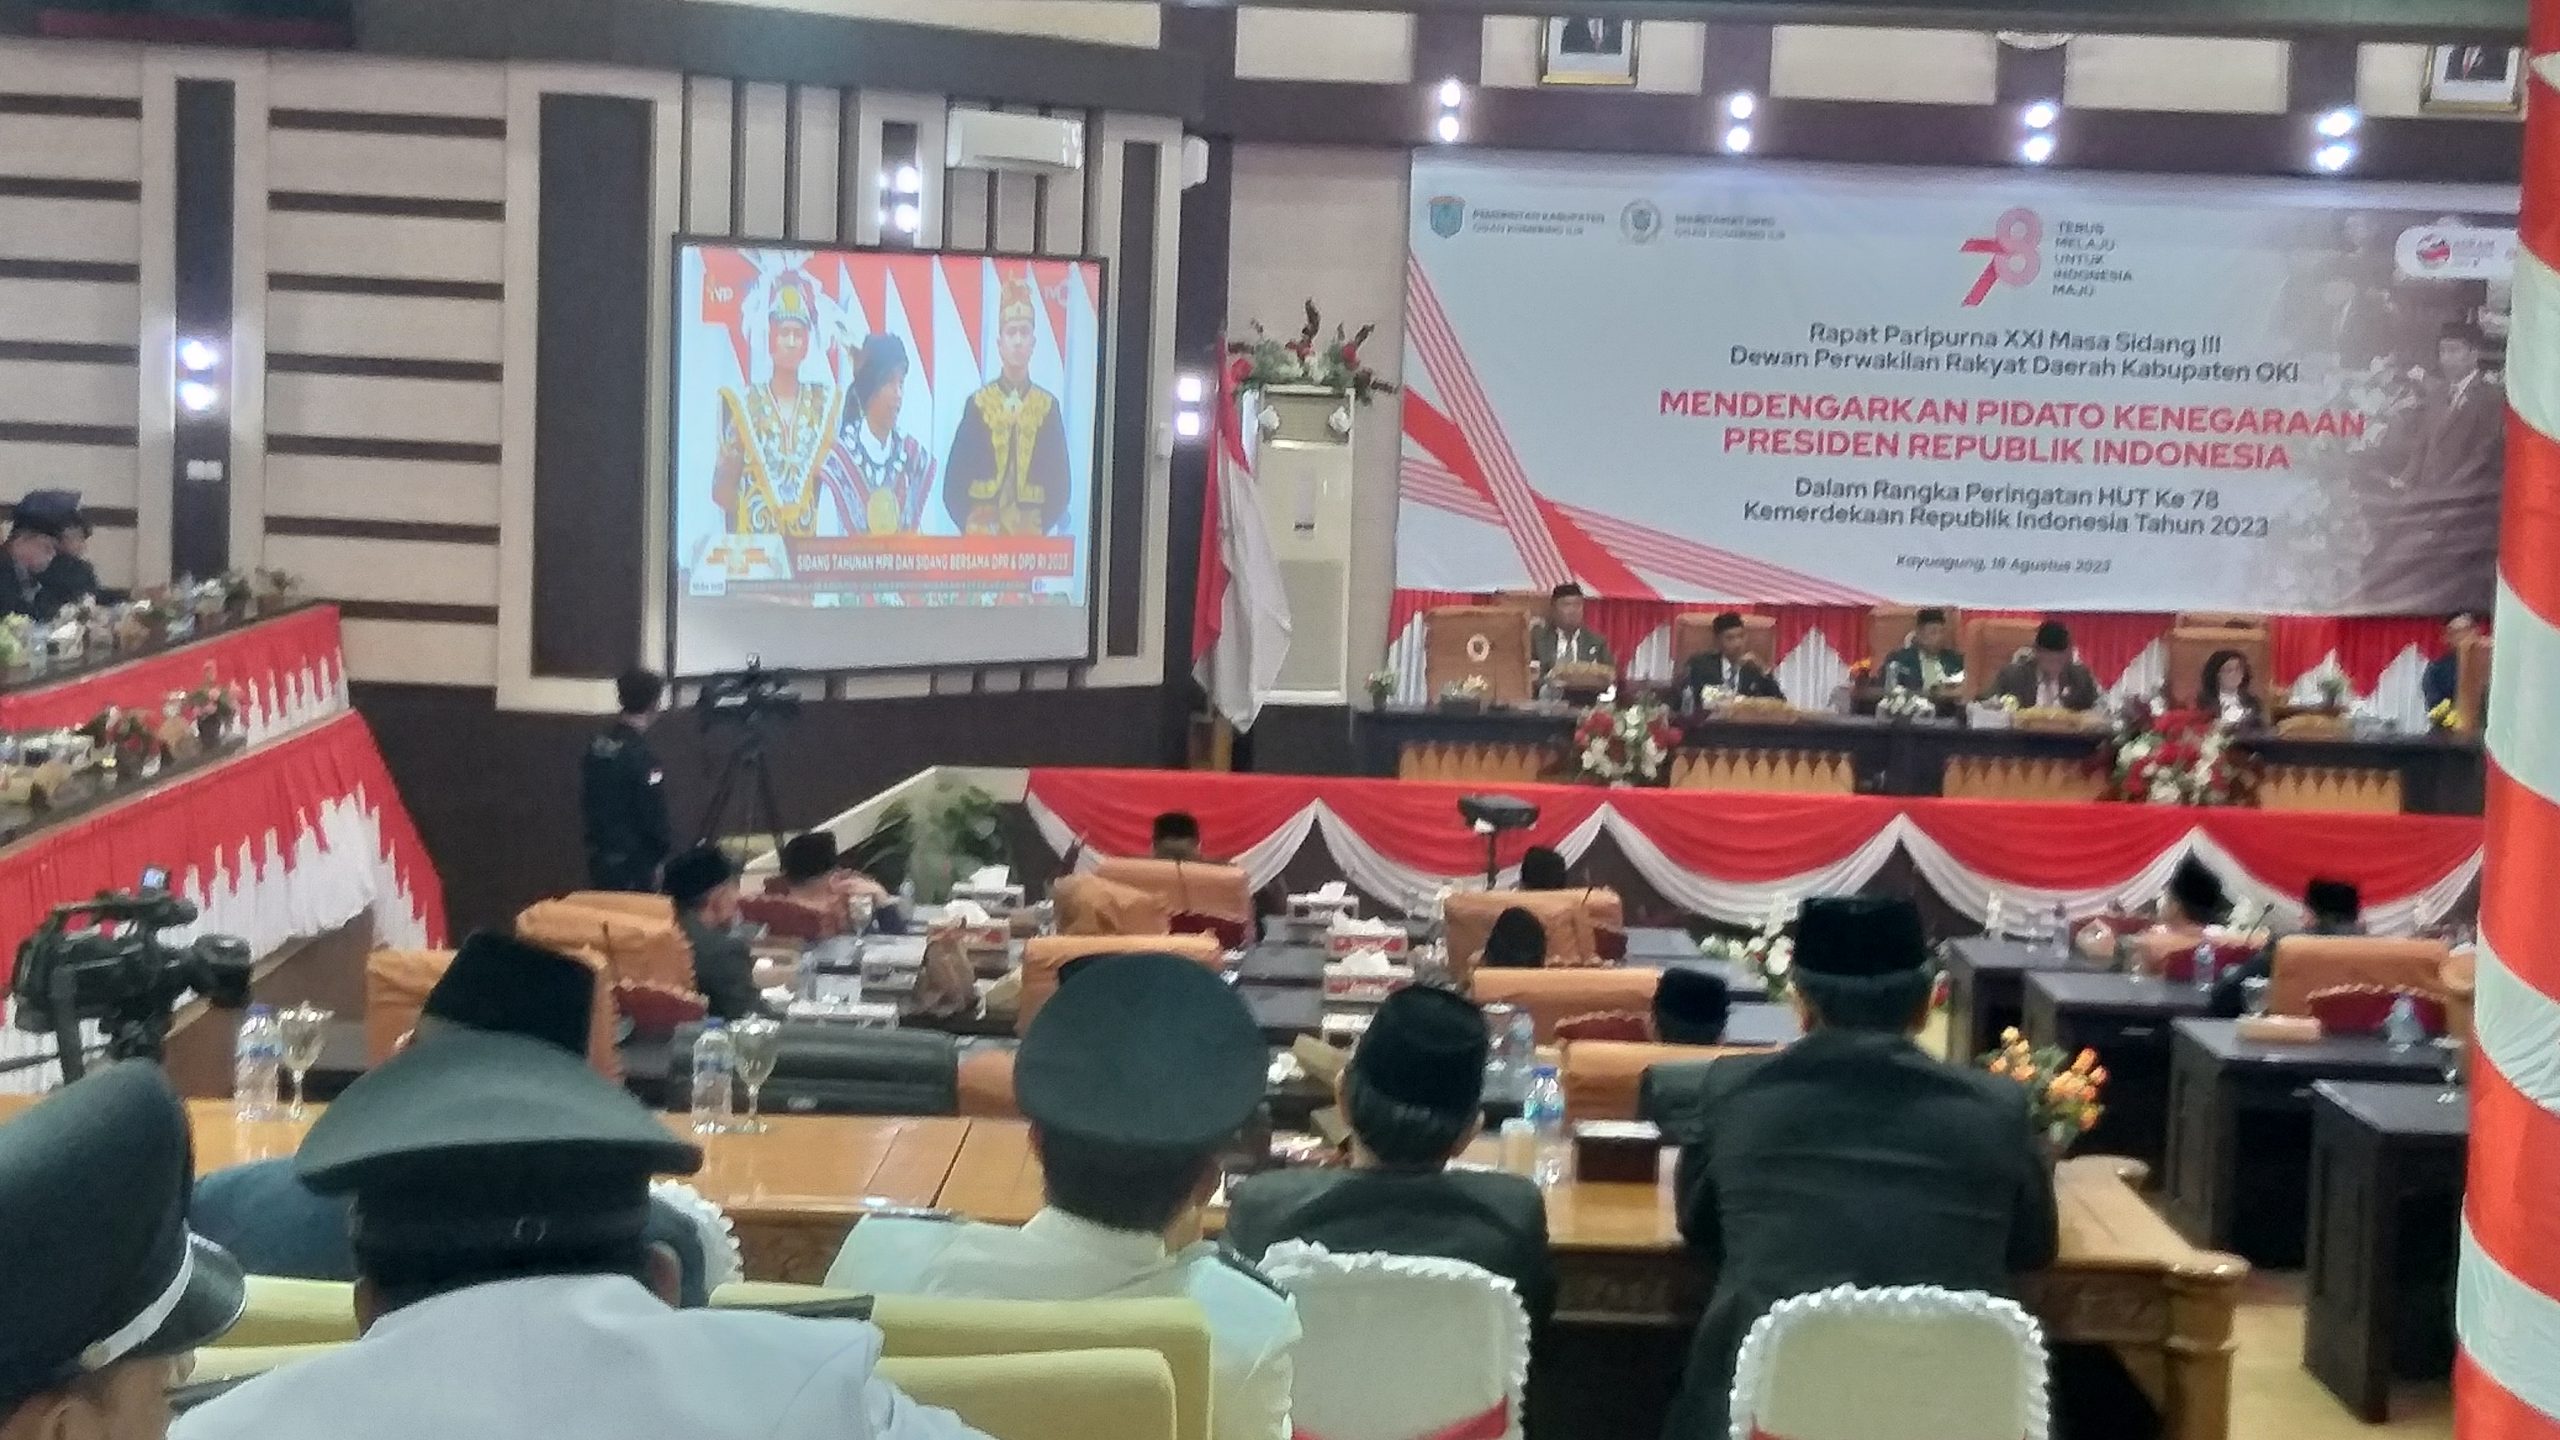 Peringati HUT RI ke 78, DPRD OKI Gelar Live Streaming Pidato Kenegaraan Presiden Jokowi